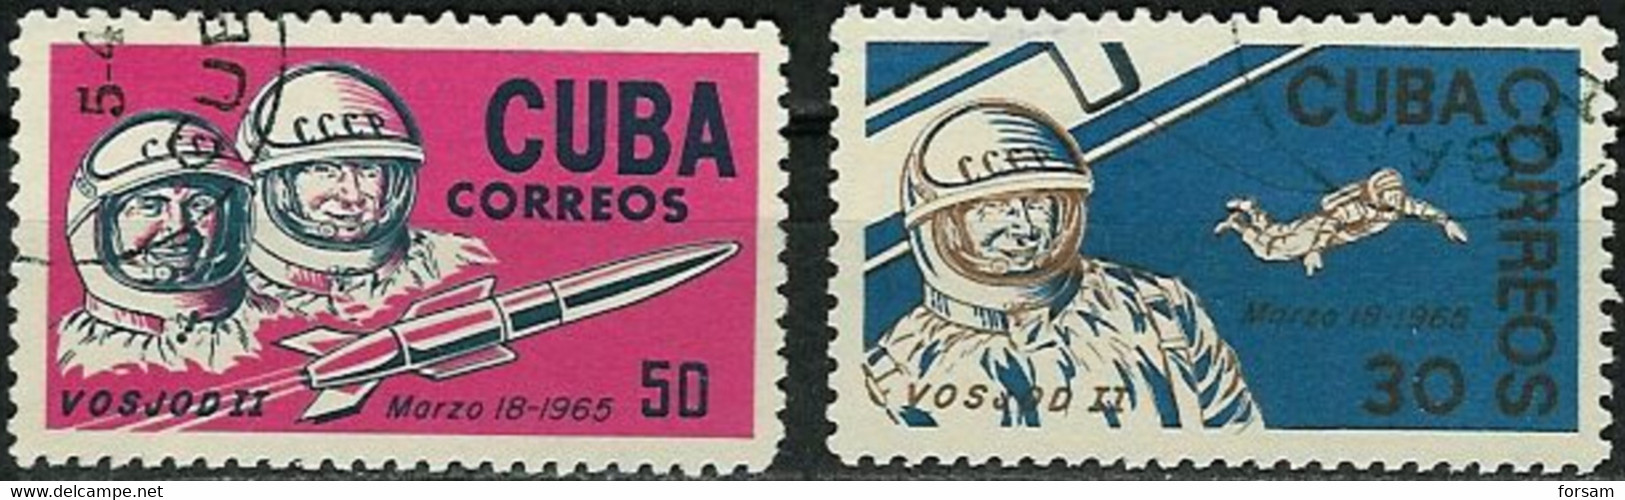 CUBA..1965..Michel # 1008-1009..used...MiCV - 2.60 Euro. - Gebraucht